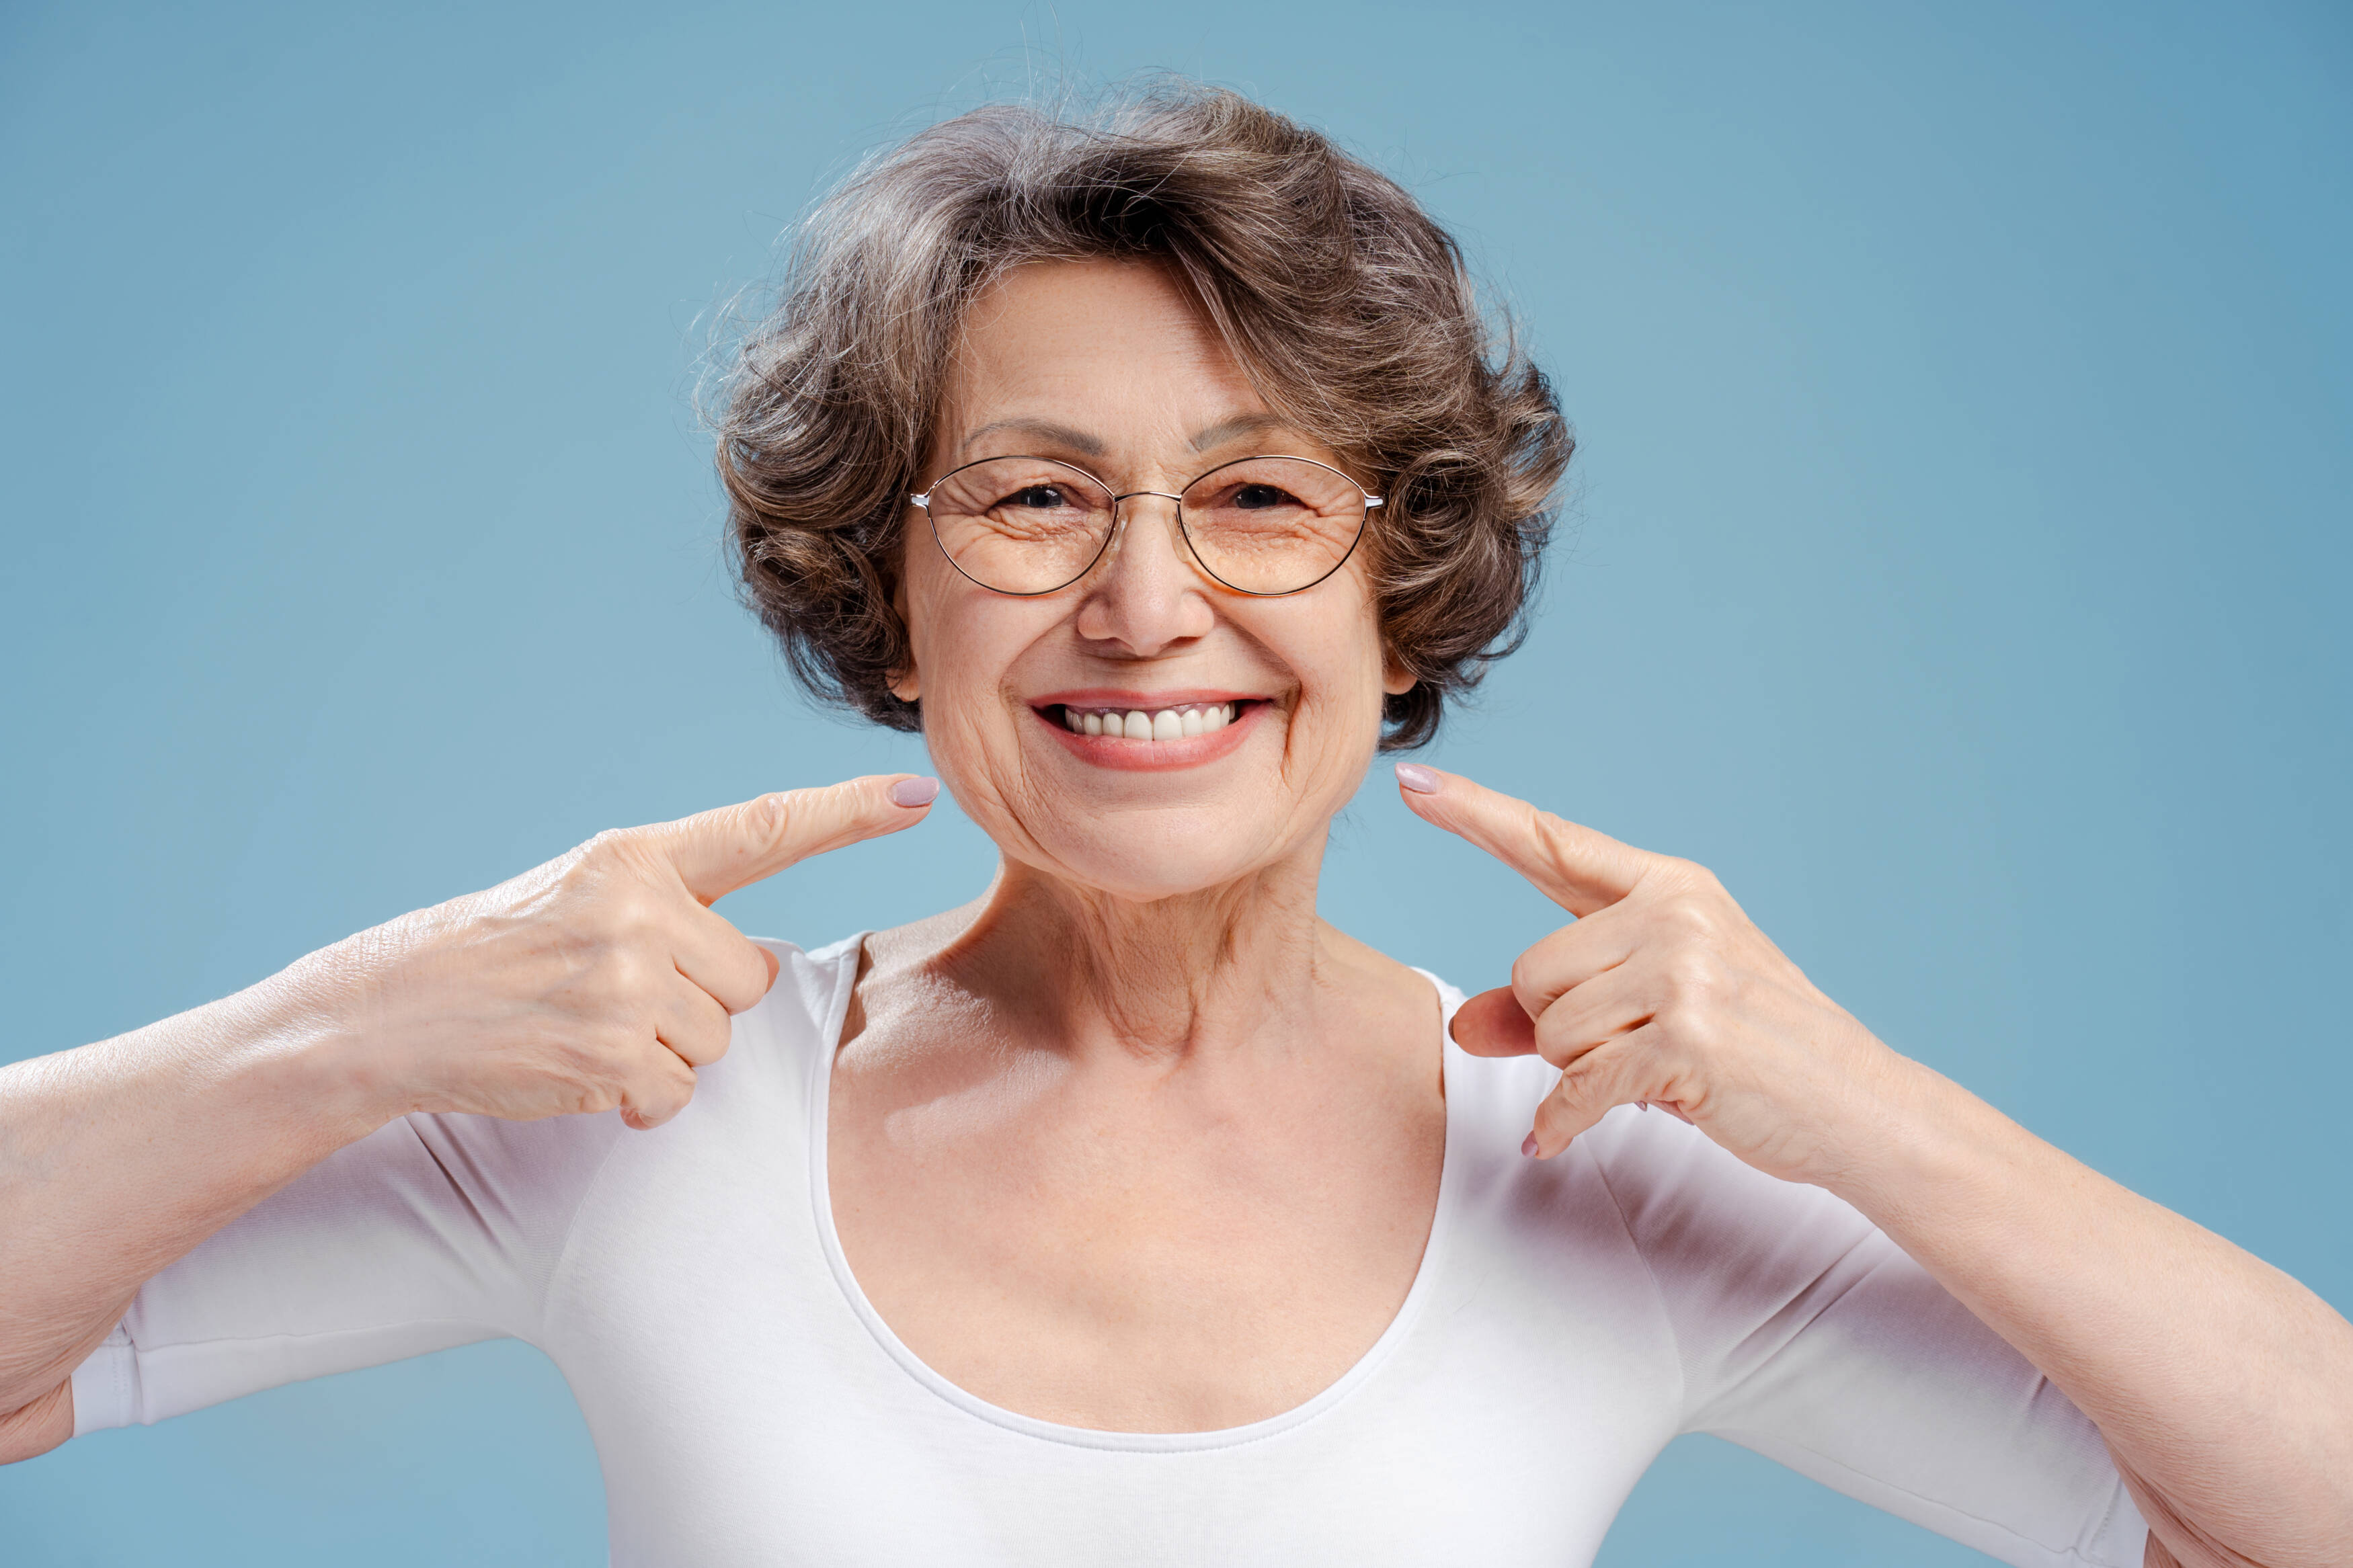 dental implants for seniors with bone loss